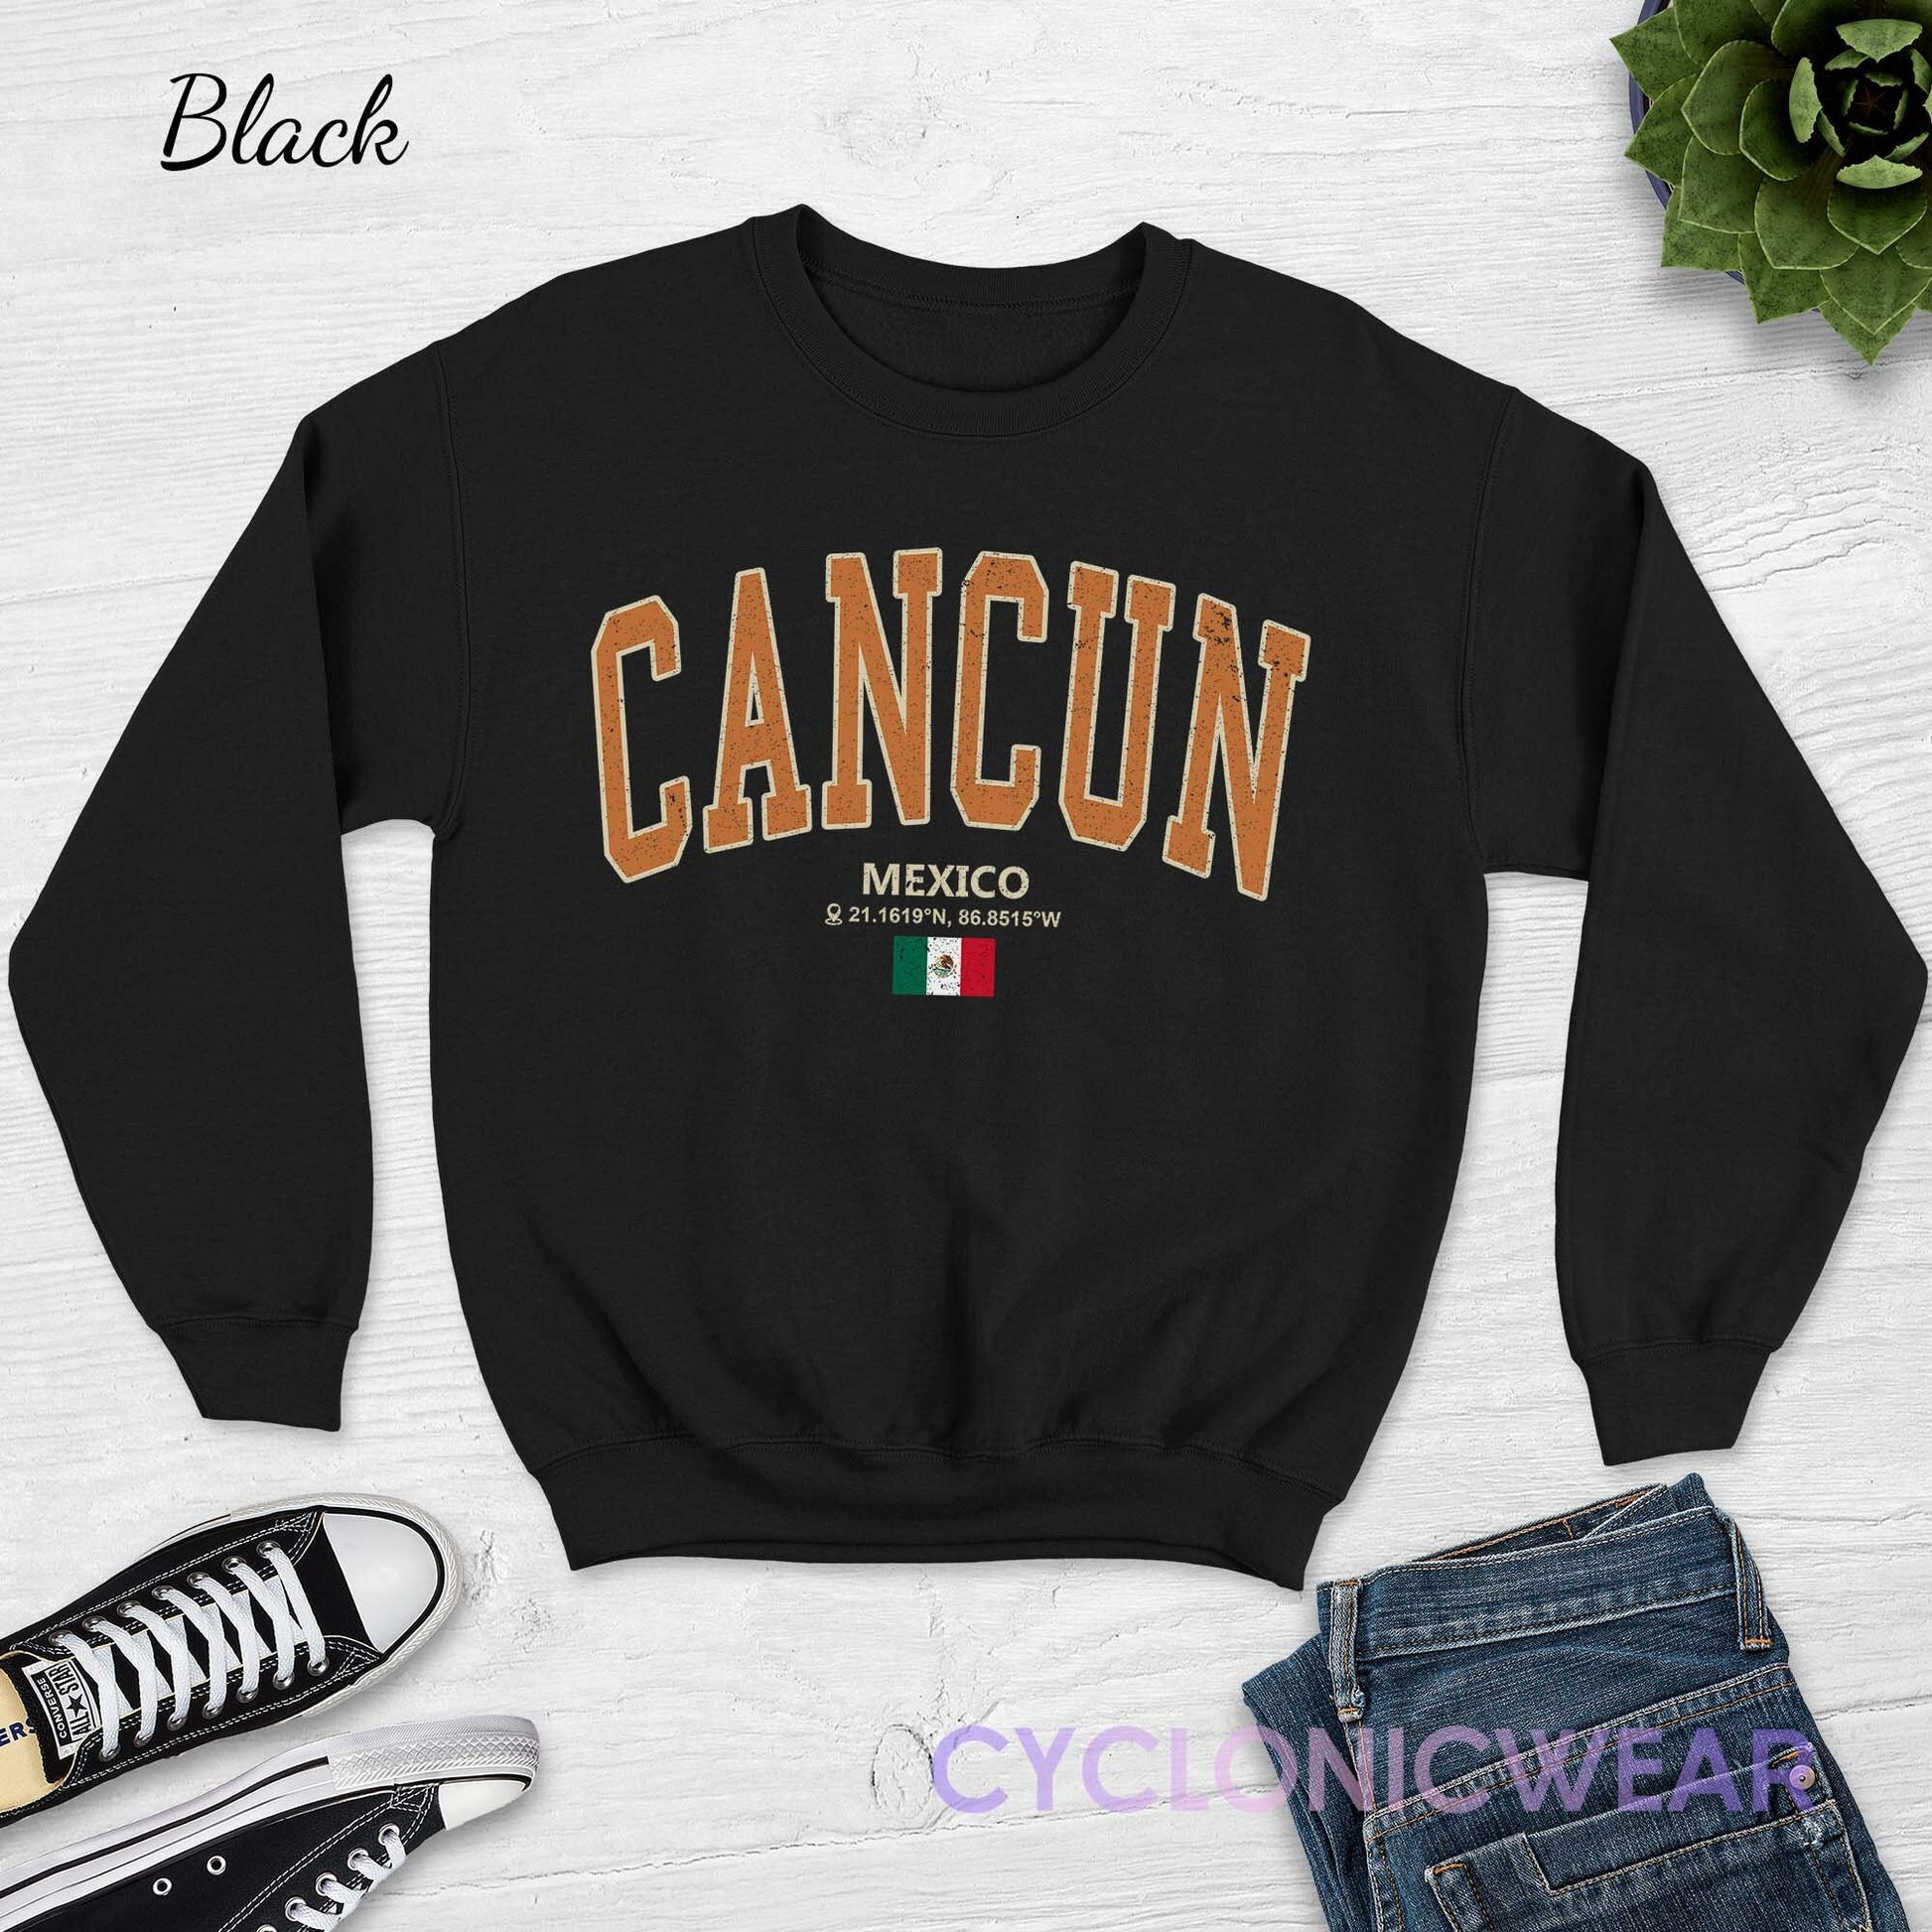 Cancun Mexico Sweatshirt, Mexico Vacation Sweater, Family Vacation, Beach Vacation Sweater, Mexico Travel Gift, Cancun Sweater, Mexico Gift